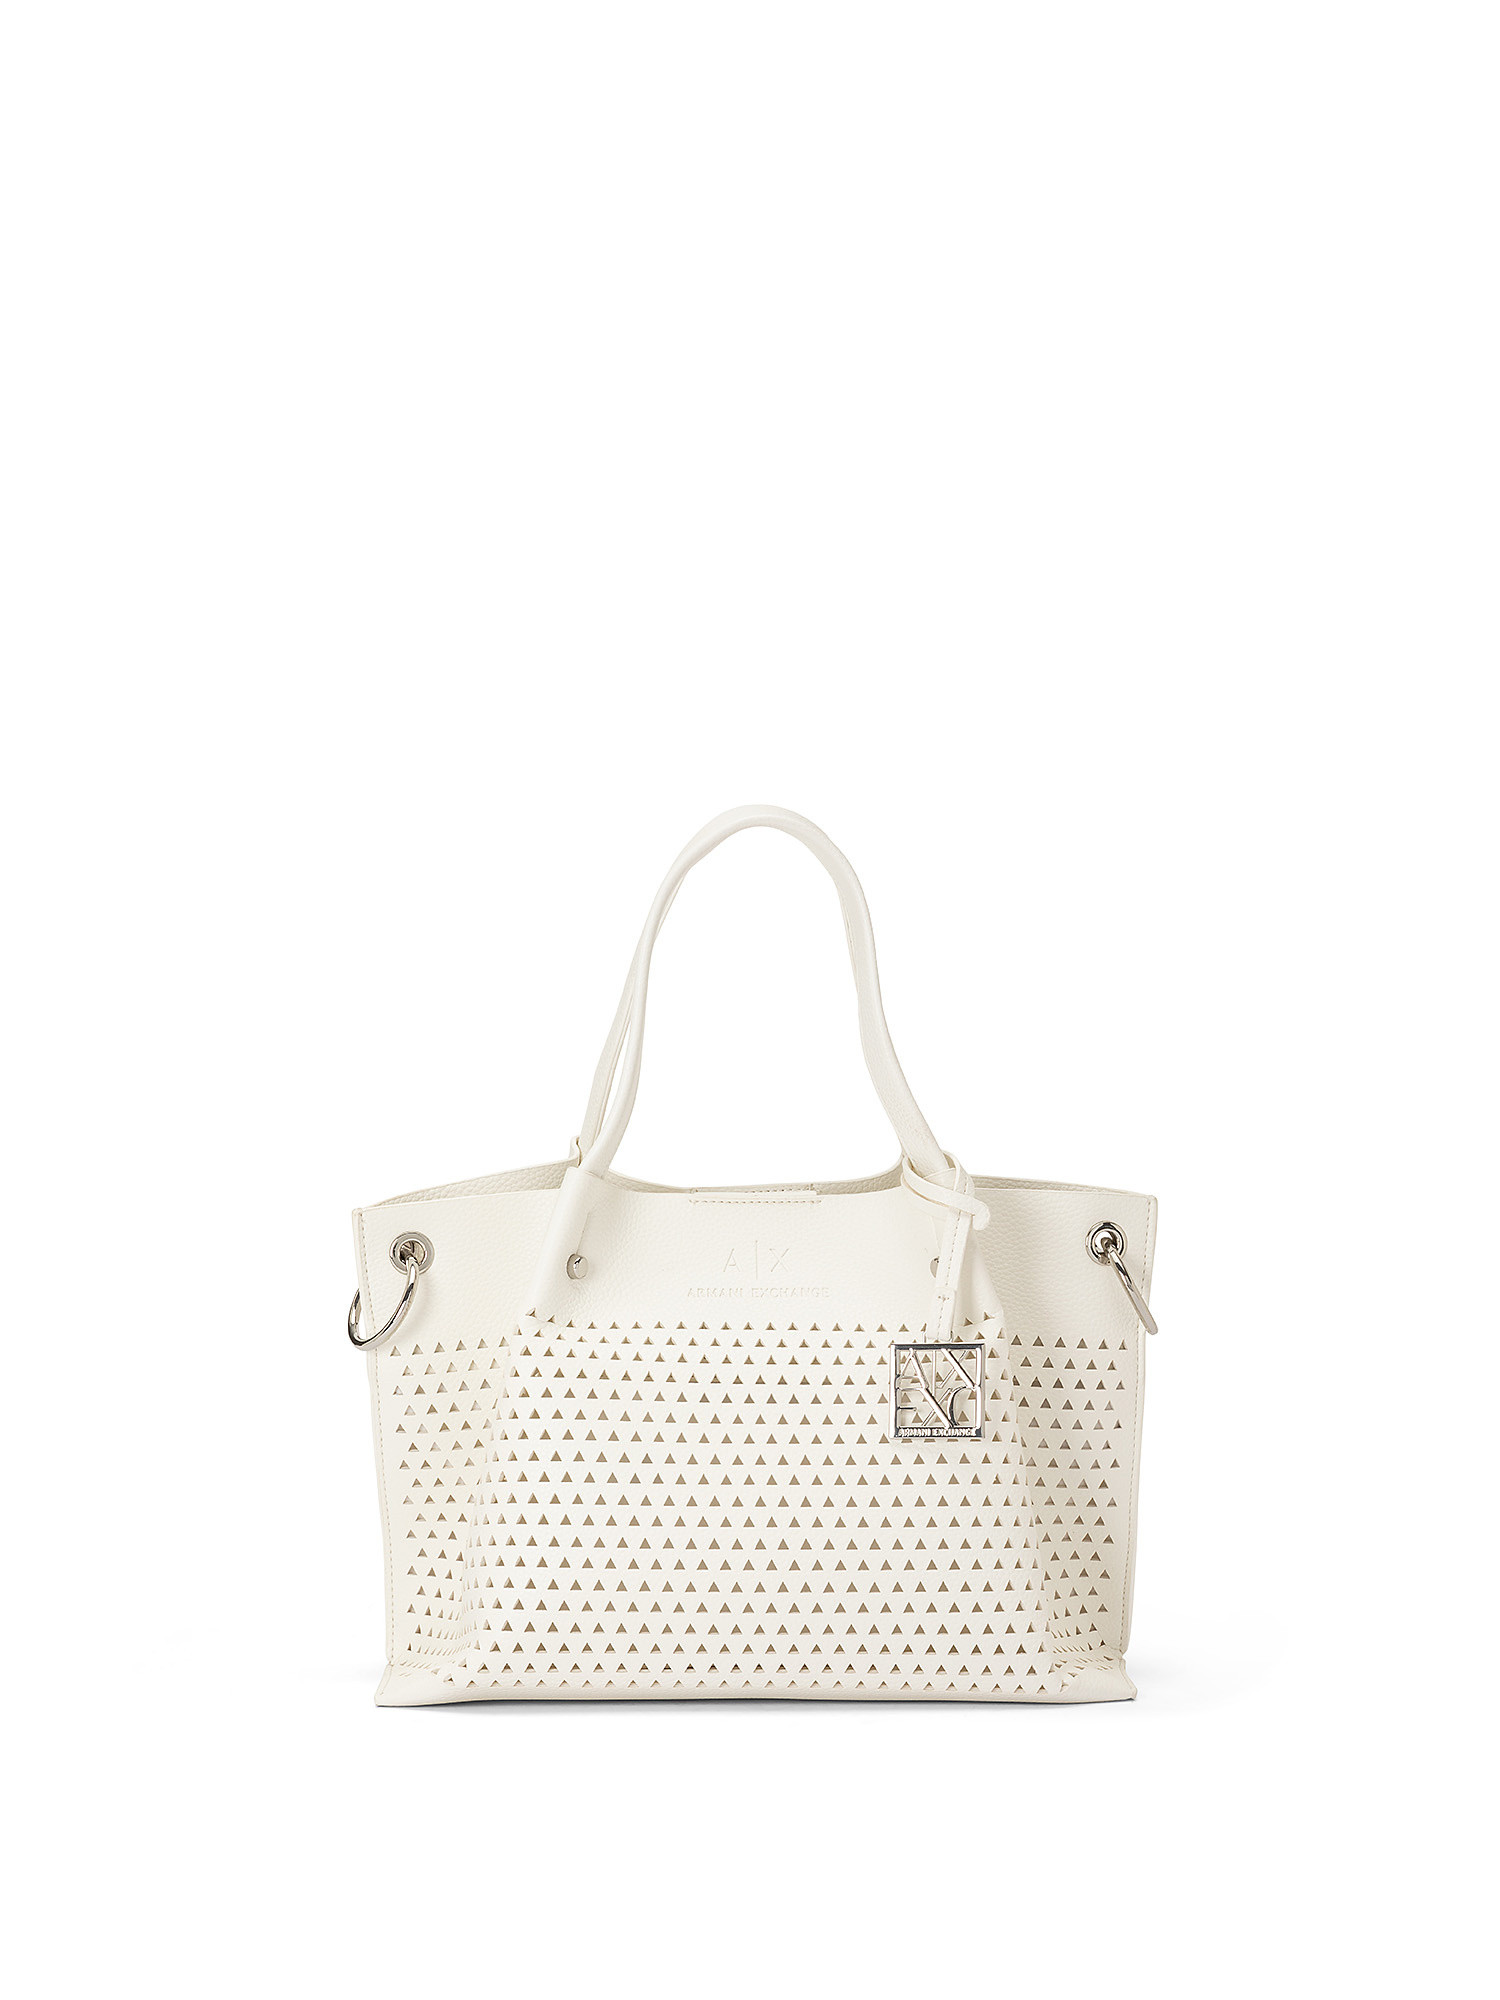 Shopping bag con cerniera superiore, Bianco, large image number 0